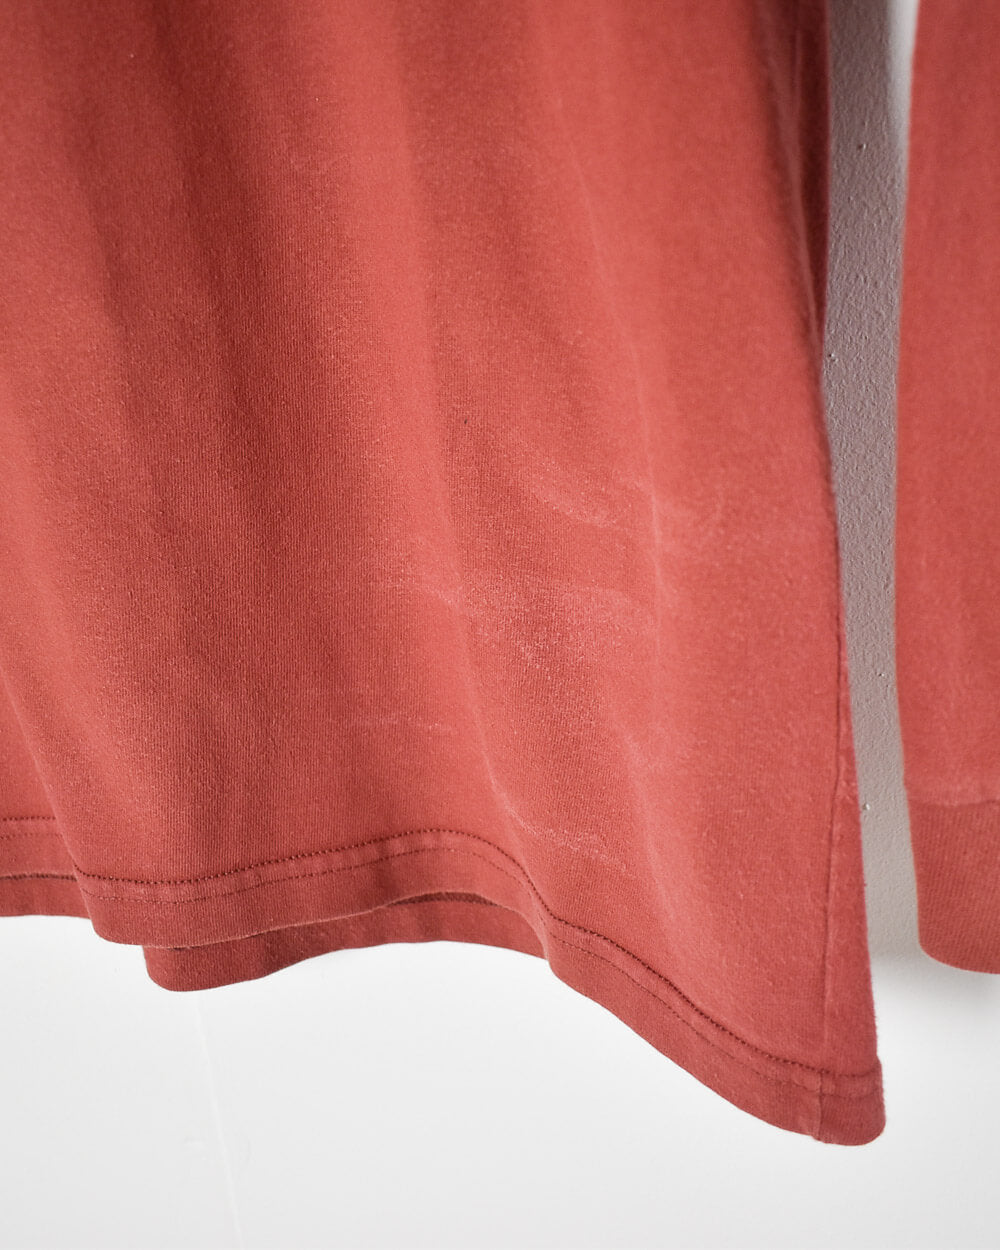 Red Patagonia Long Sleeved T-Shirt - Medium